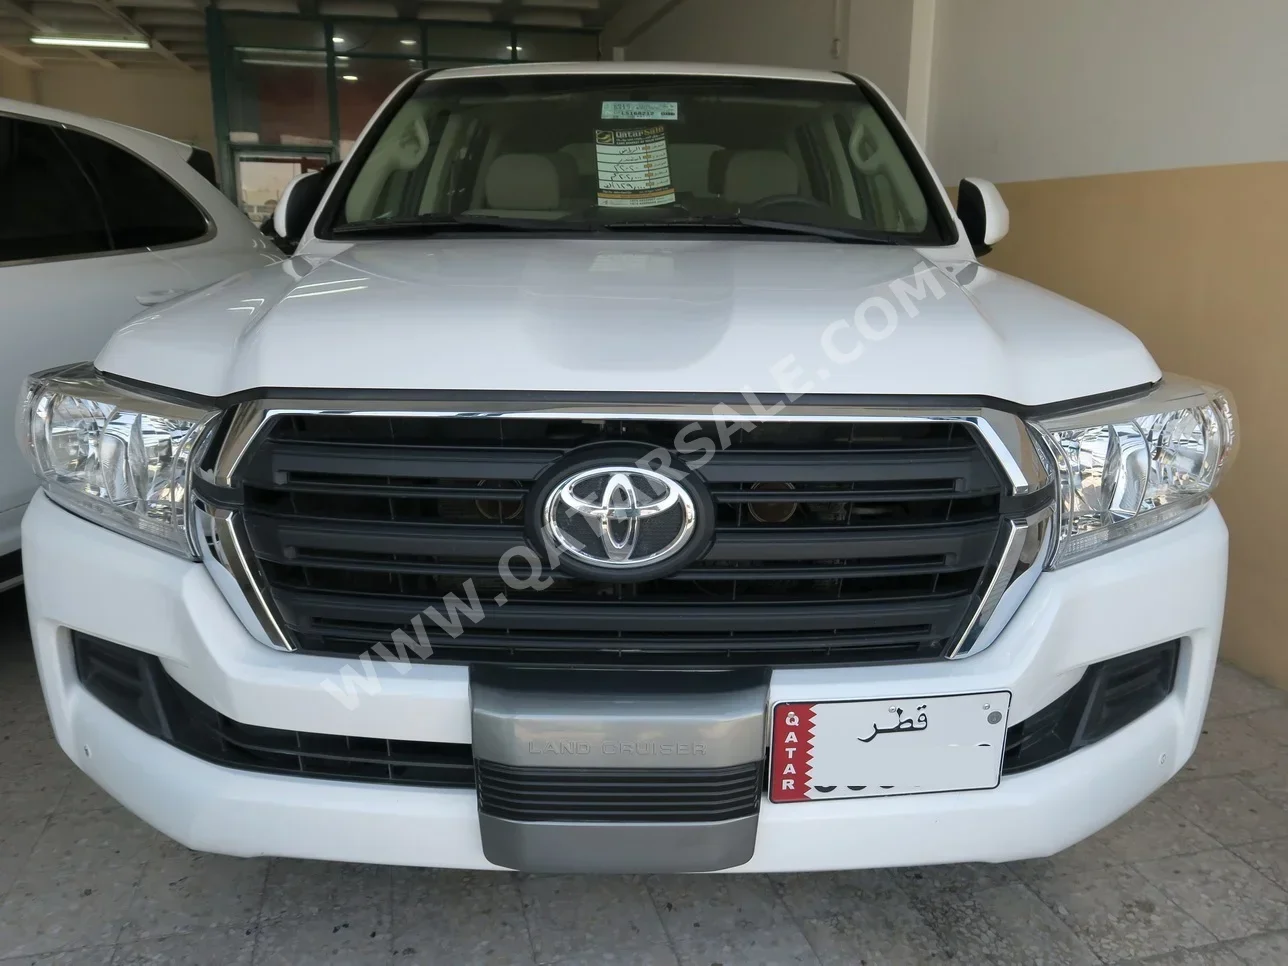 Toyota  Land Cruiser  GX  2020  Automatic  202,000 Km  6 Cylinder  Four Wheel Drive (4WD)  SUV  White